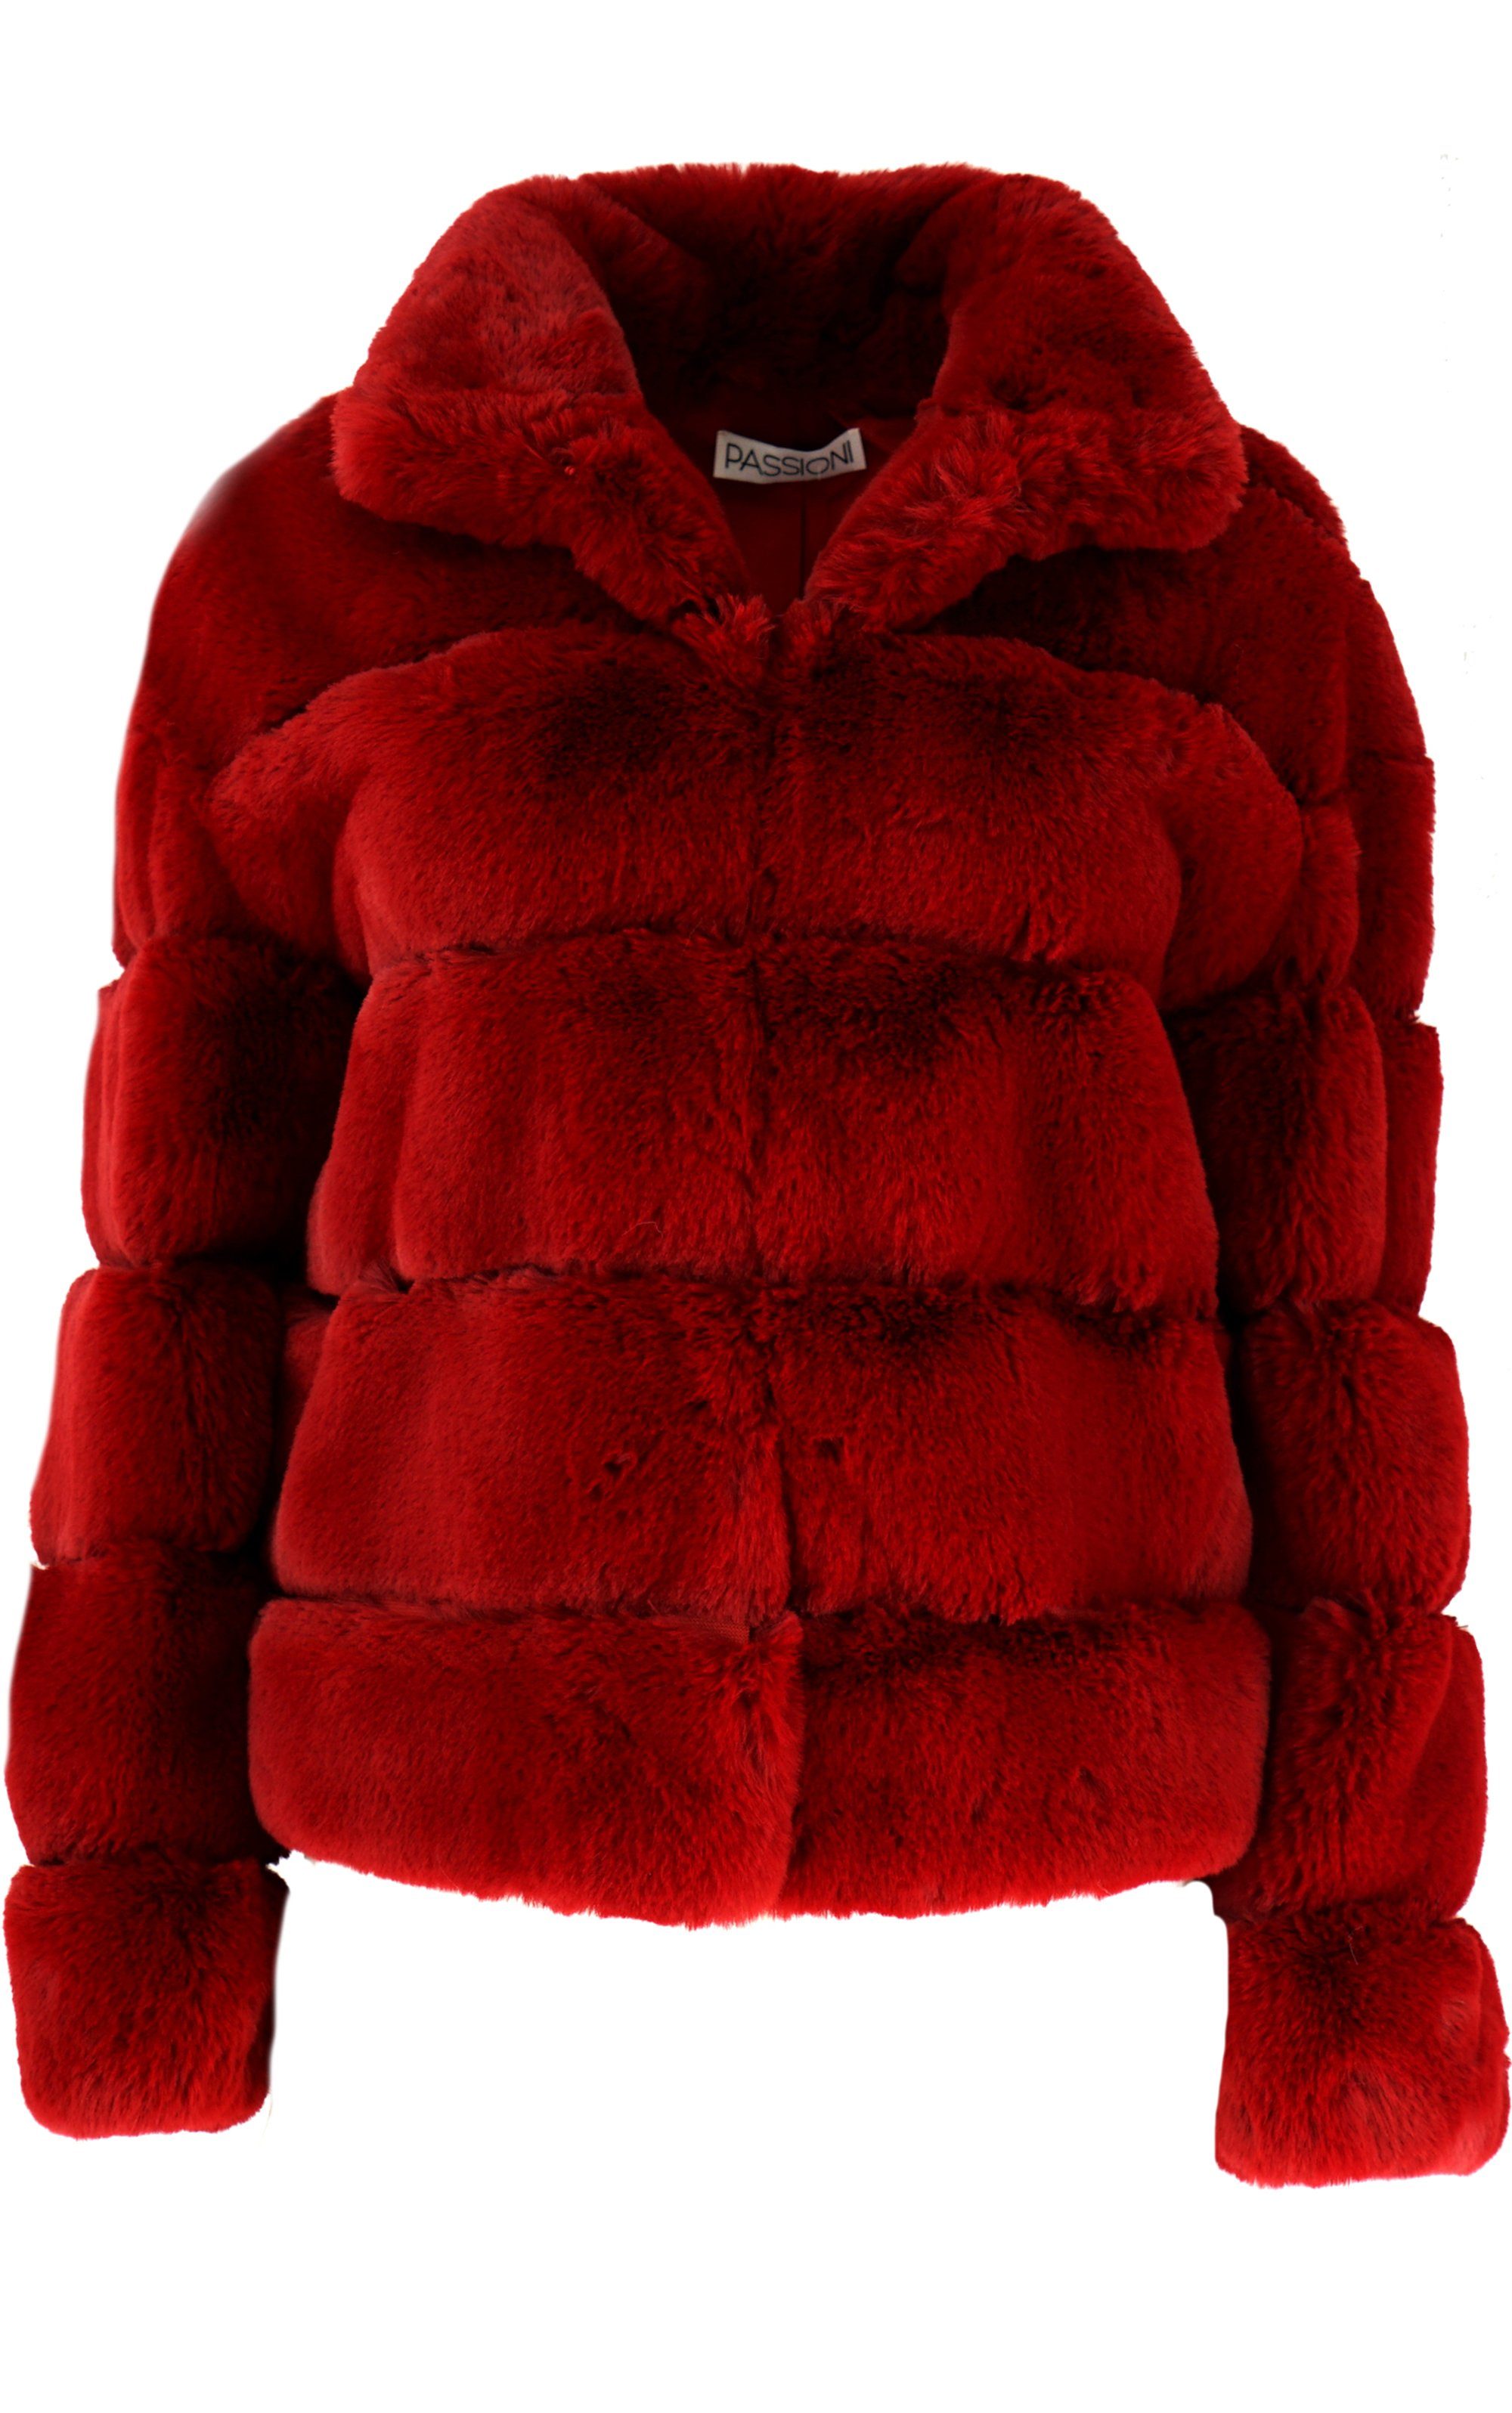 Antonio Cavosi Winterjacke hochwertige Web-Pellz Jacke in rot